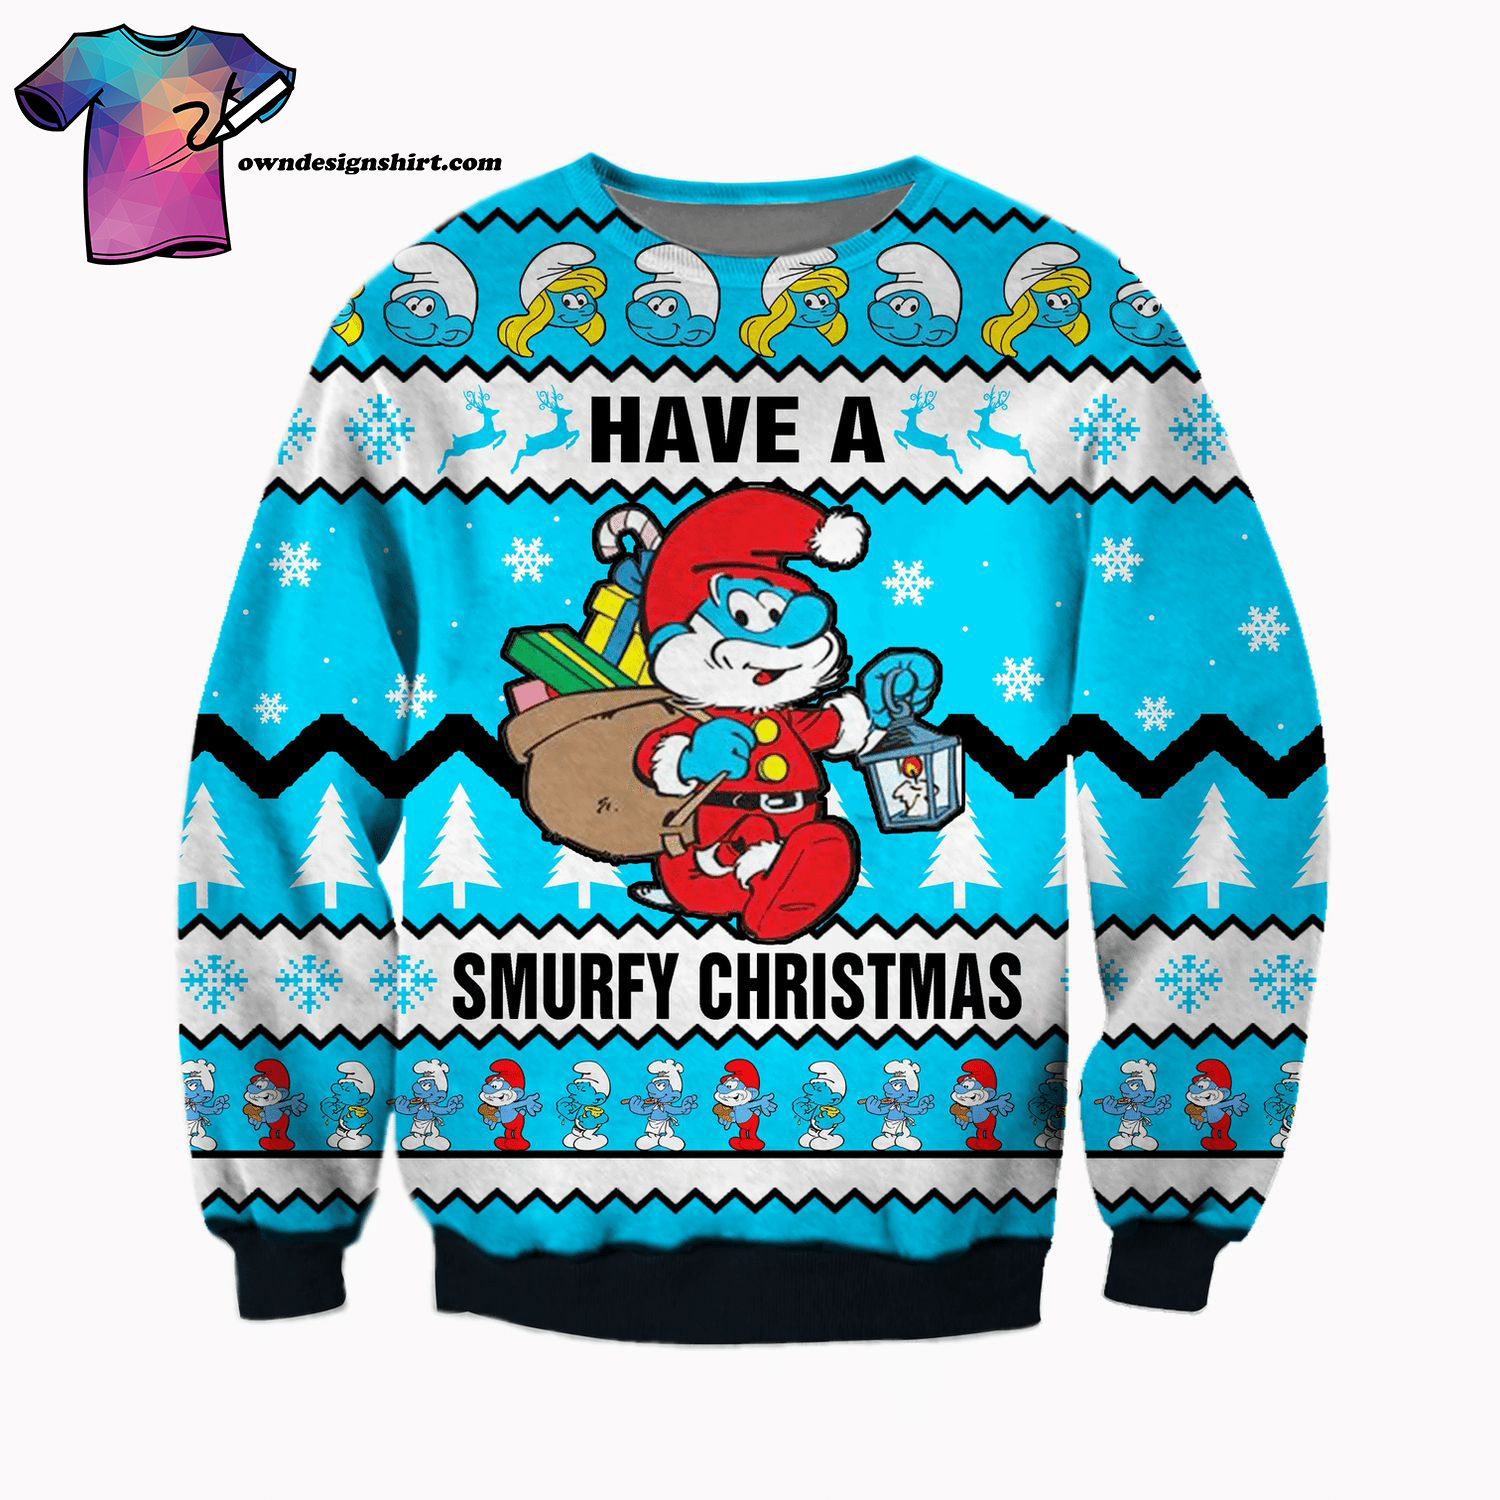 Have a Smurfy Christmas Ugly Christmas Sweater